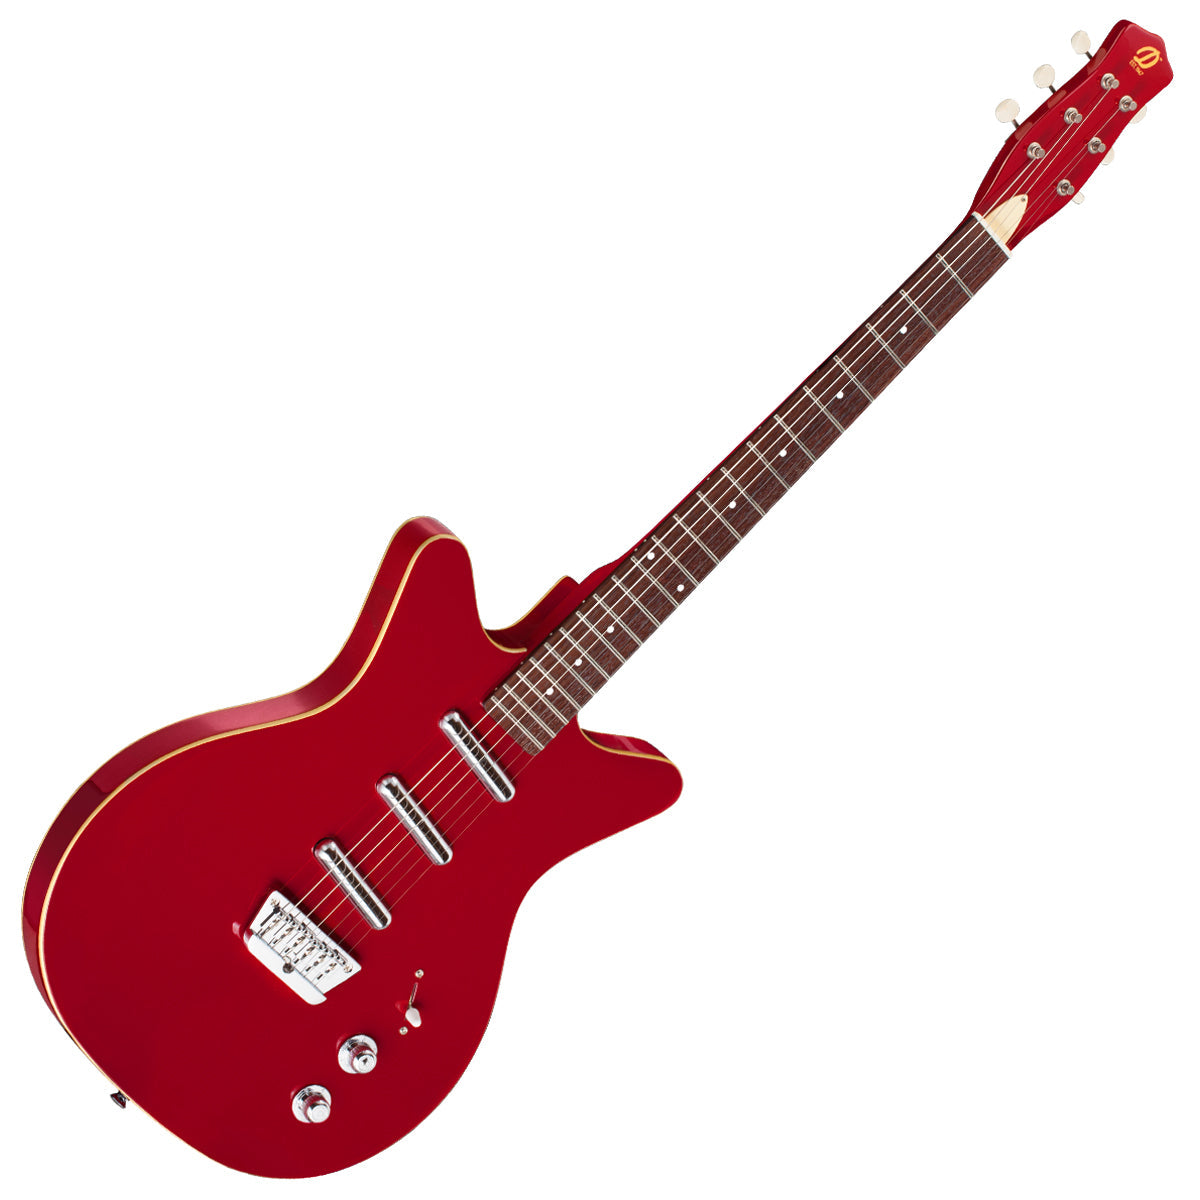 Danelectro Triple Divine Guitar ~ Red, Electric Guitar for sale at Richards Guitars.